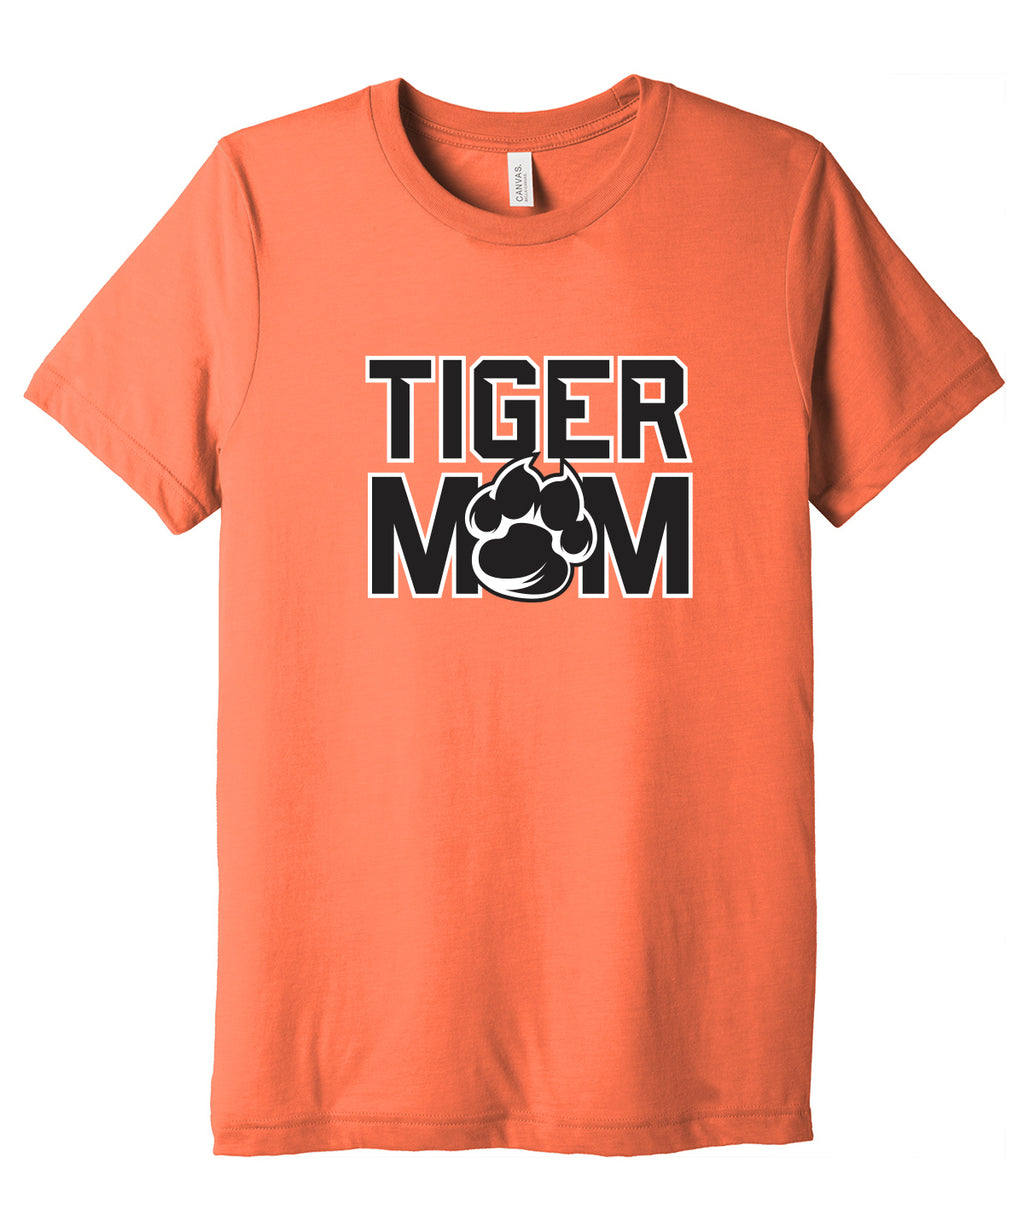 Tiger Mom Triblend Tee